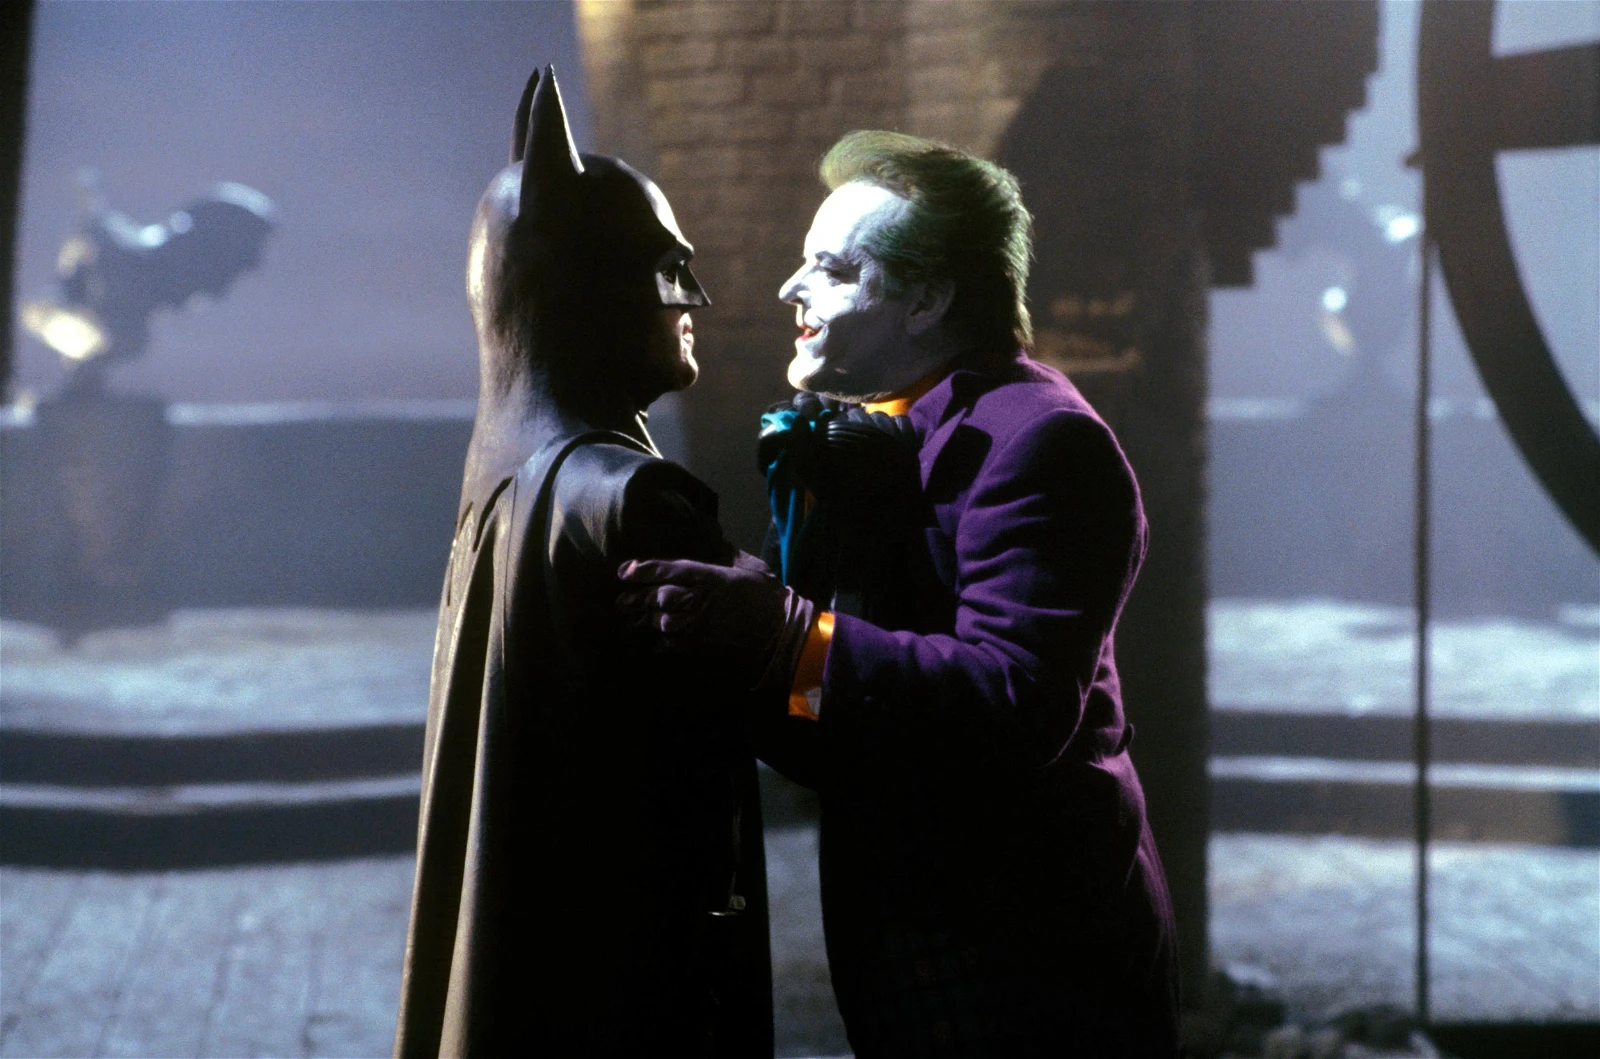 Batman and Joker in Tim Burton's 1989 film